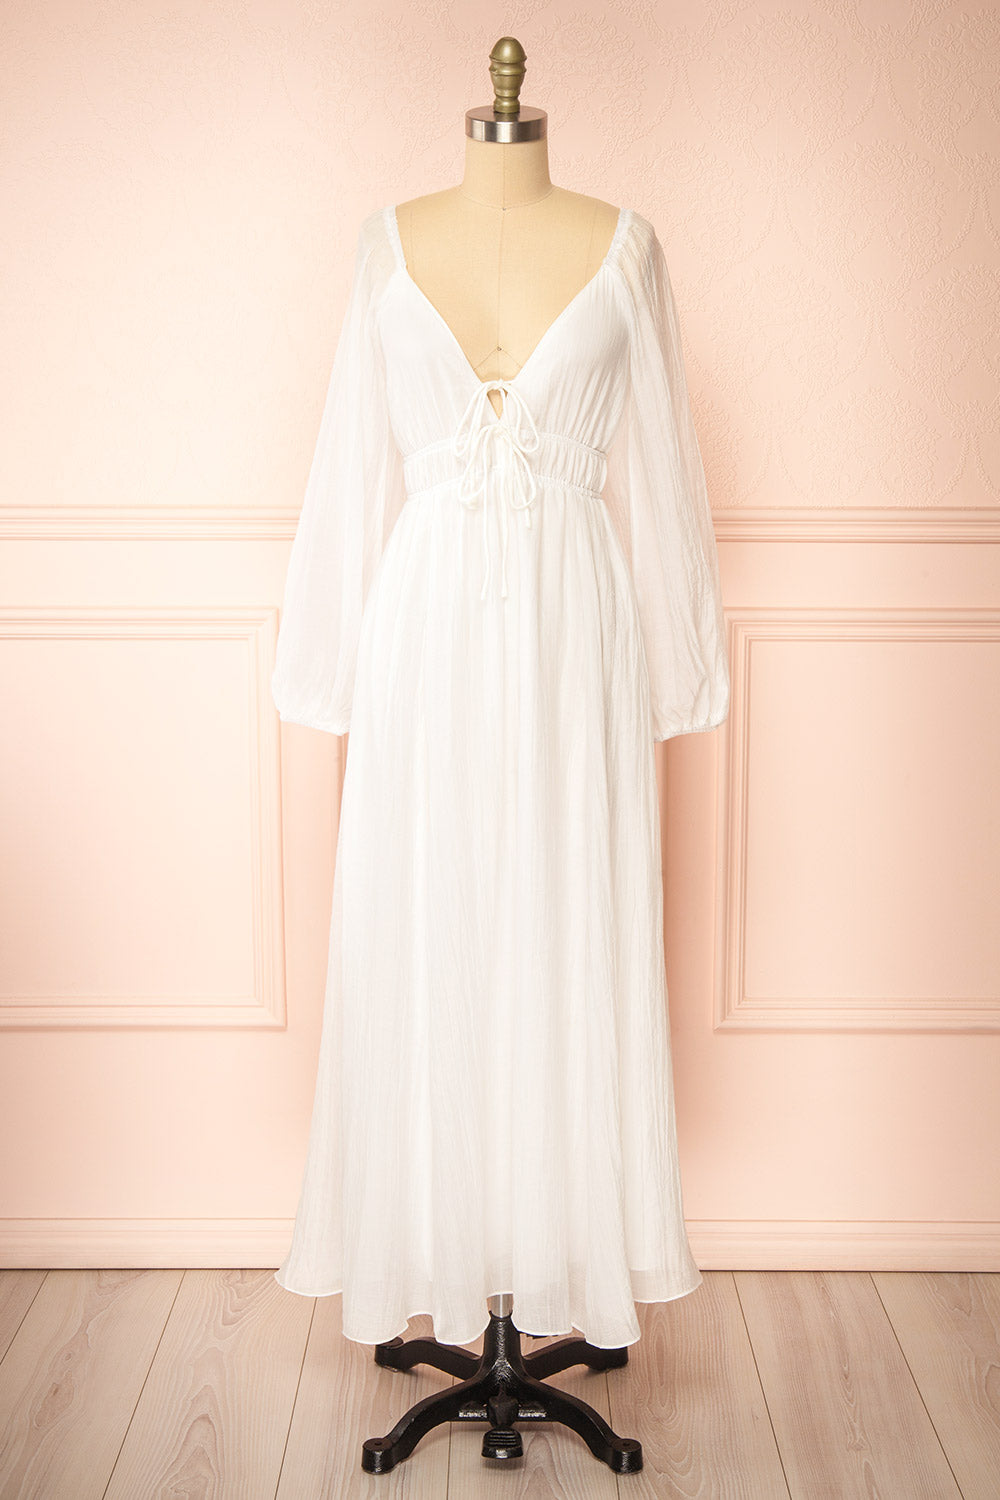 Fallon White Maxi Dress w/ Long Sleeves | Boutique 1861 front view